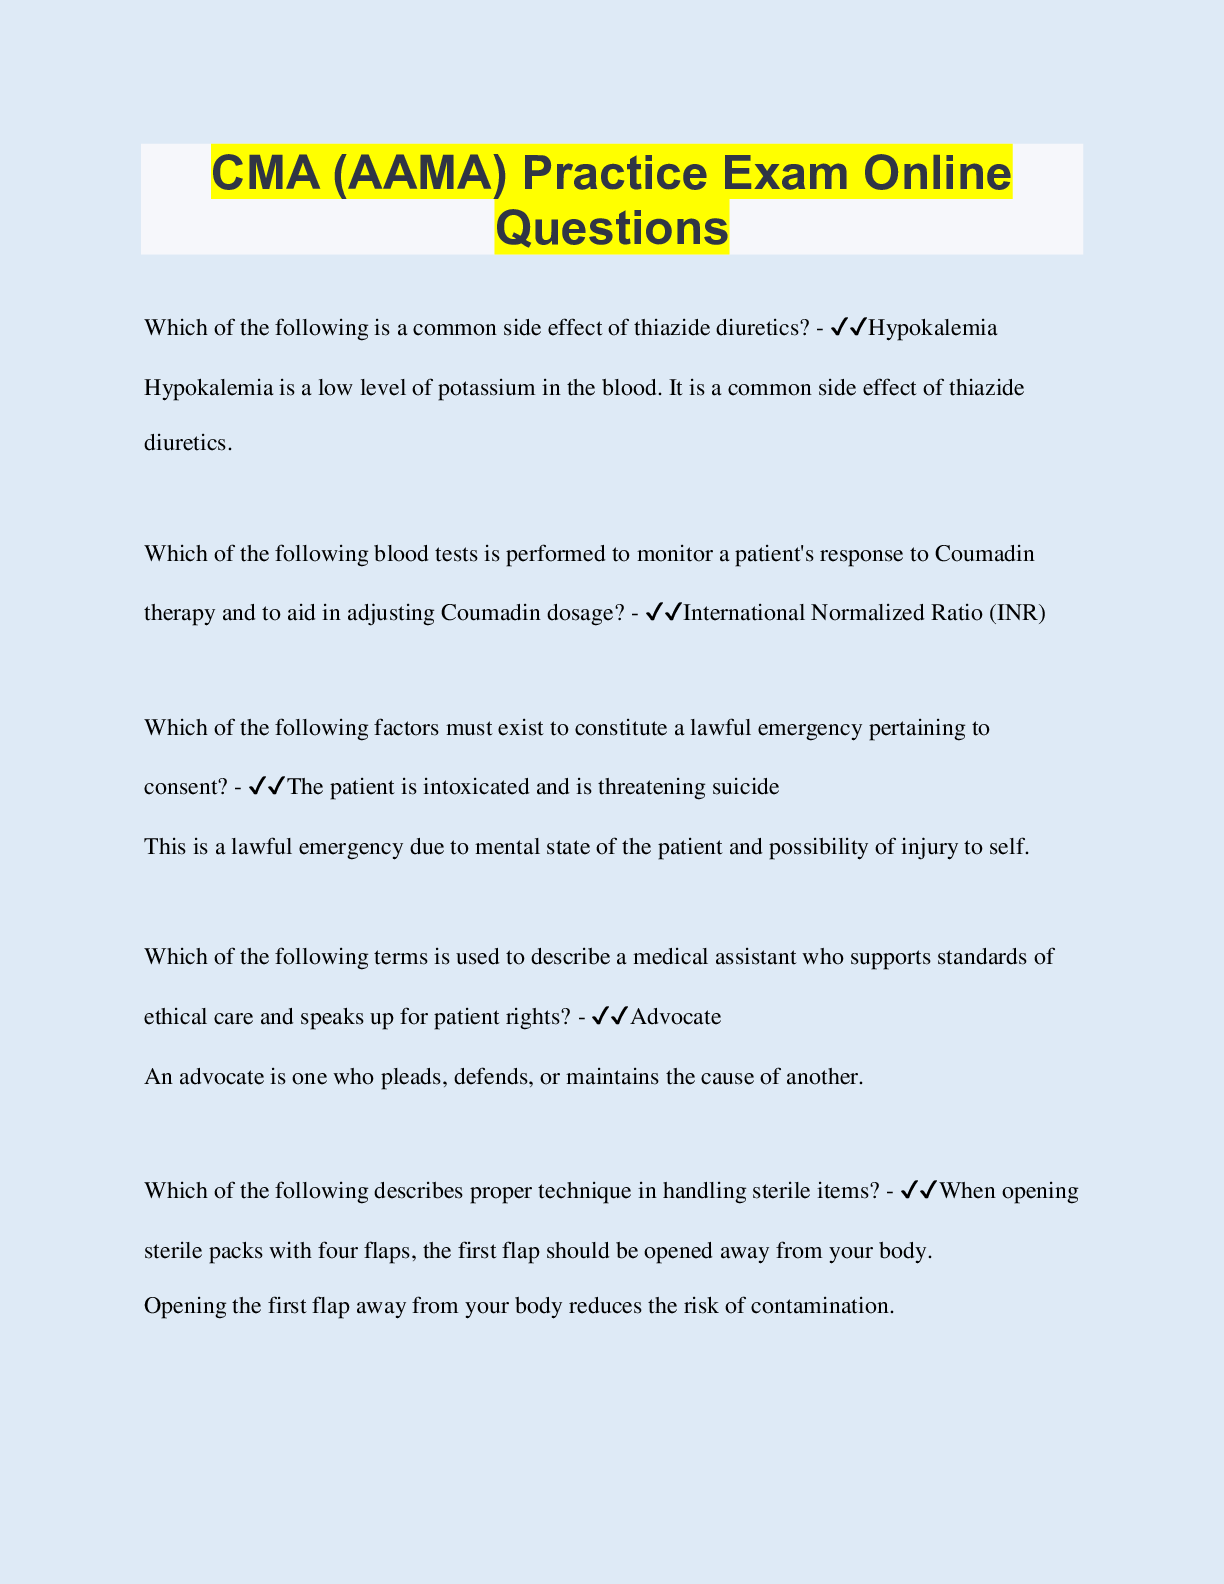 CMA (AAMA) Practice Exam Online Questions Browsegrades